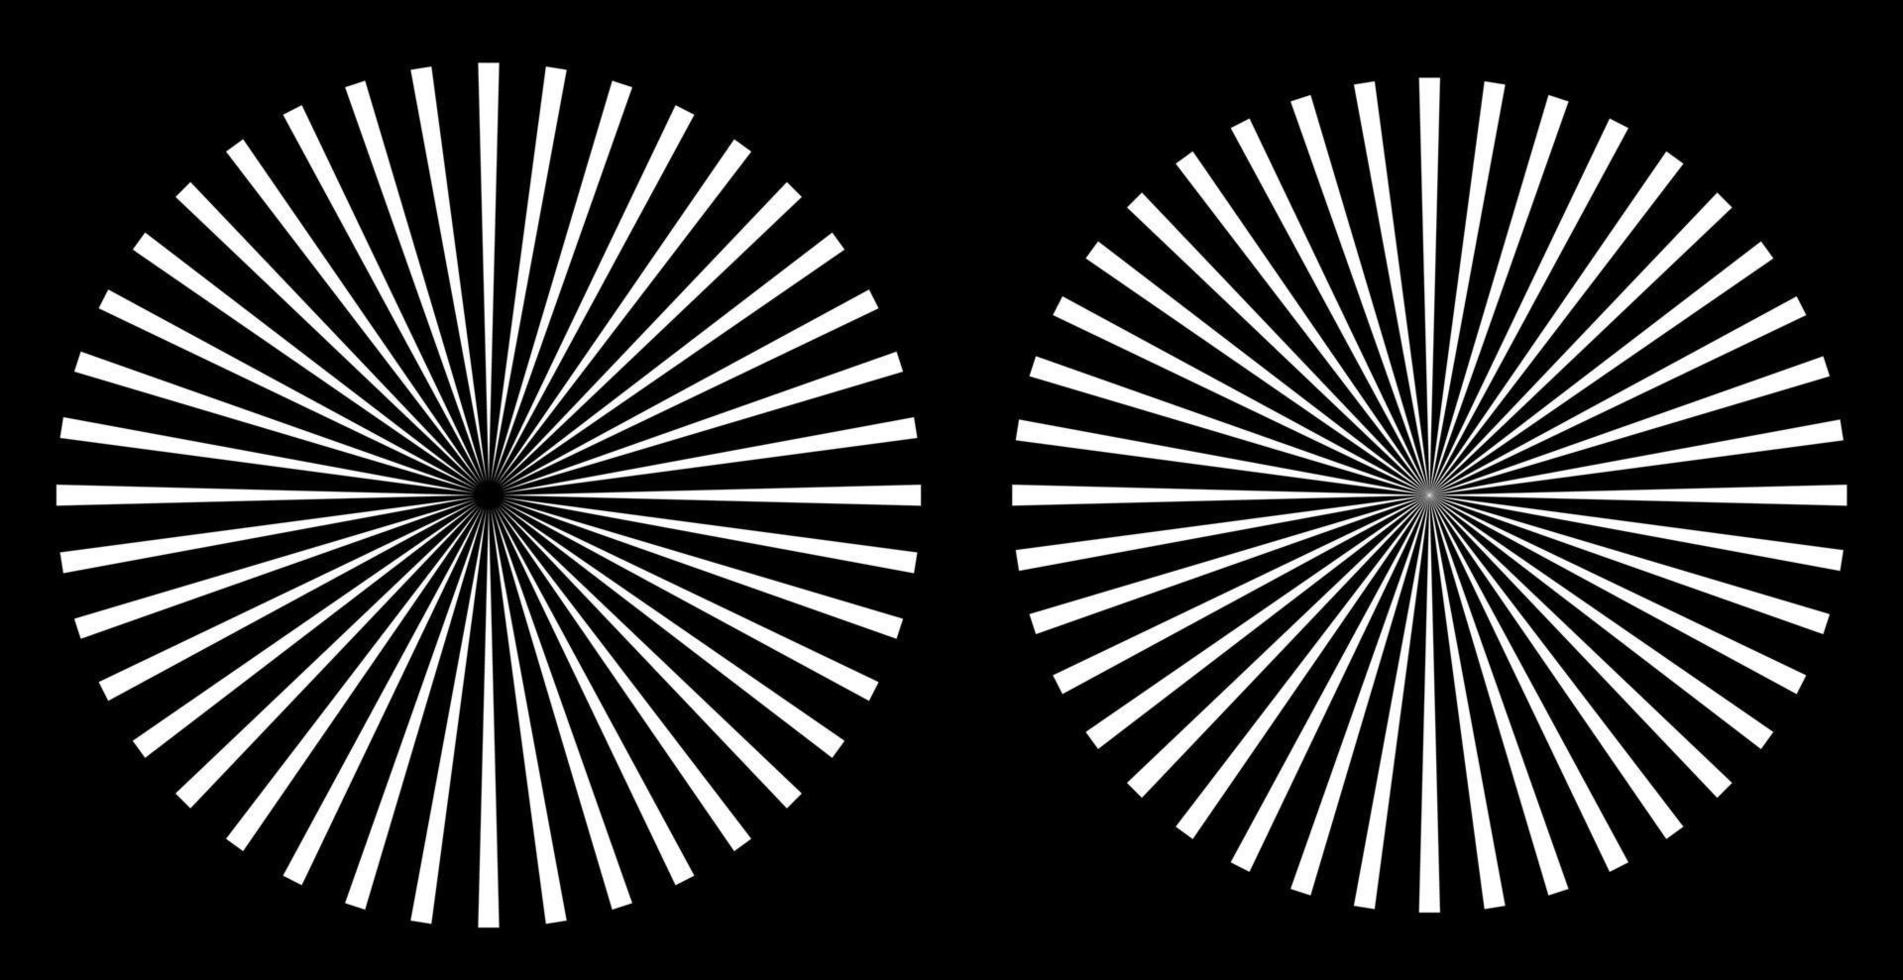 Rays, beams element. Sunburst, starburst shape on white. Circular geometric. Abstract circular geometric shape. illustration - Vector